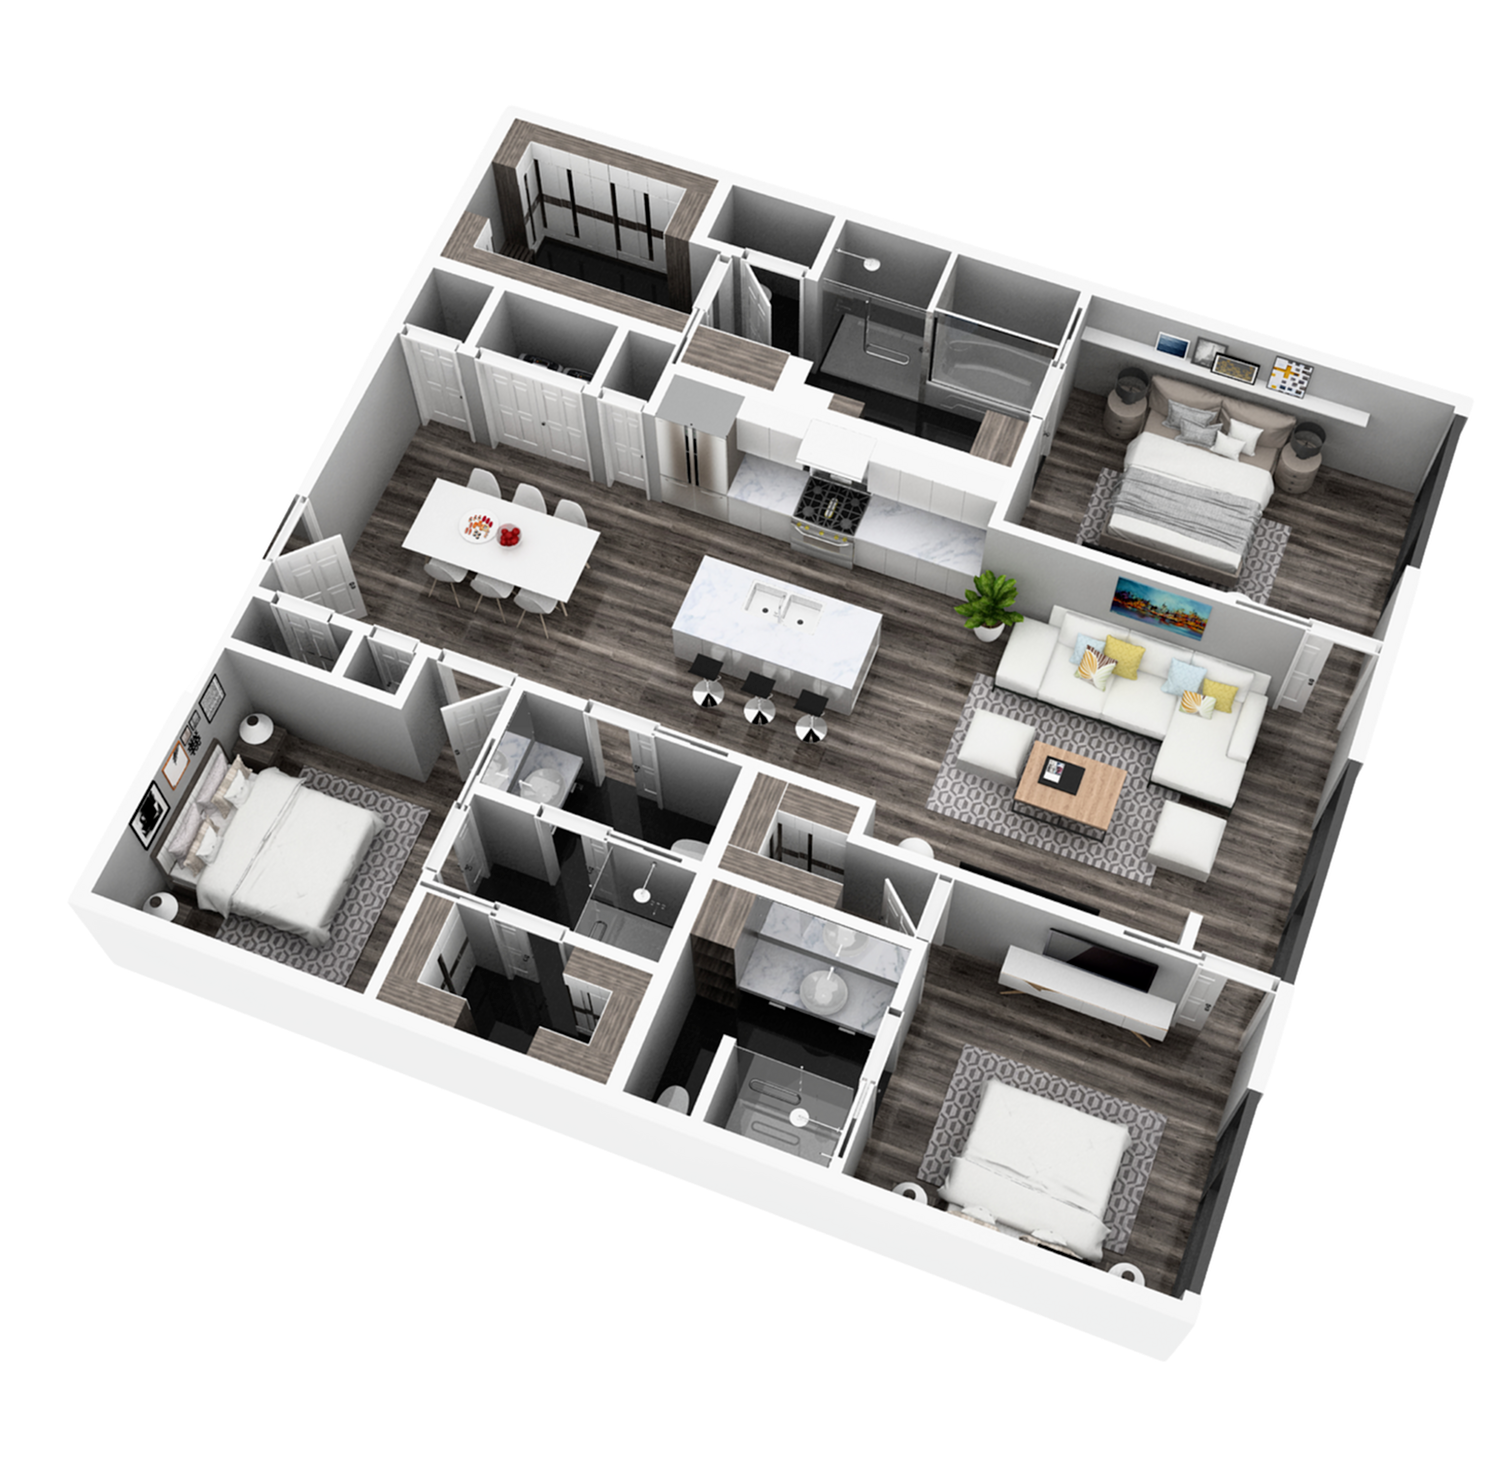 3 bedroom 3 bathroom 3D floorplan